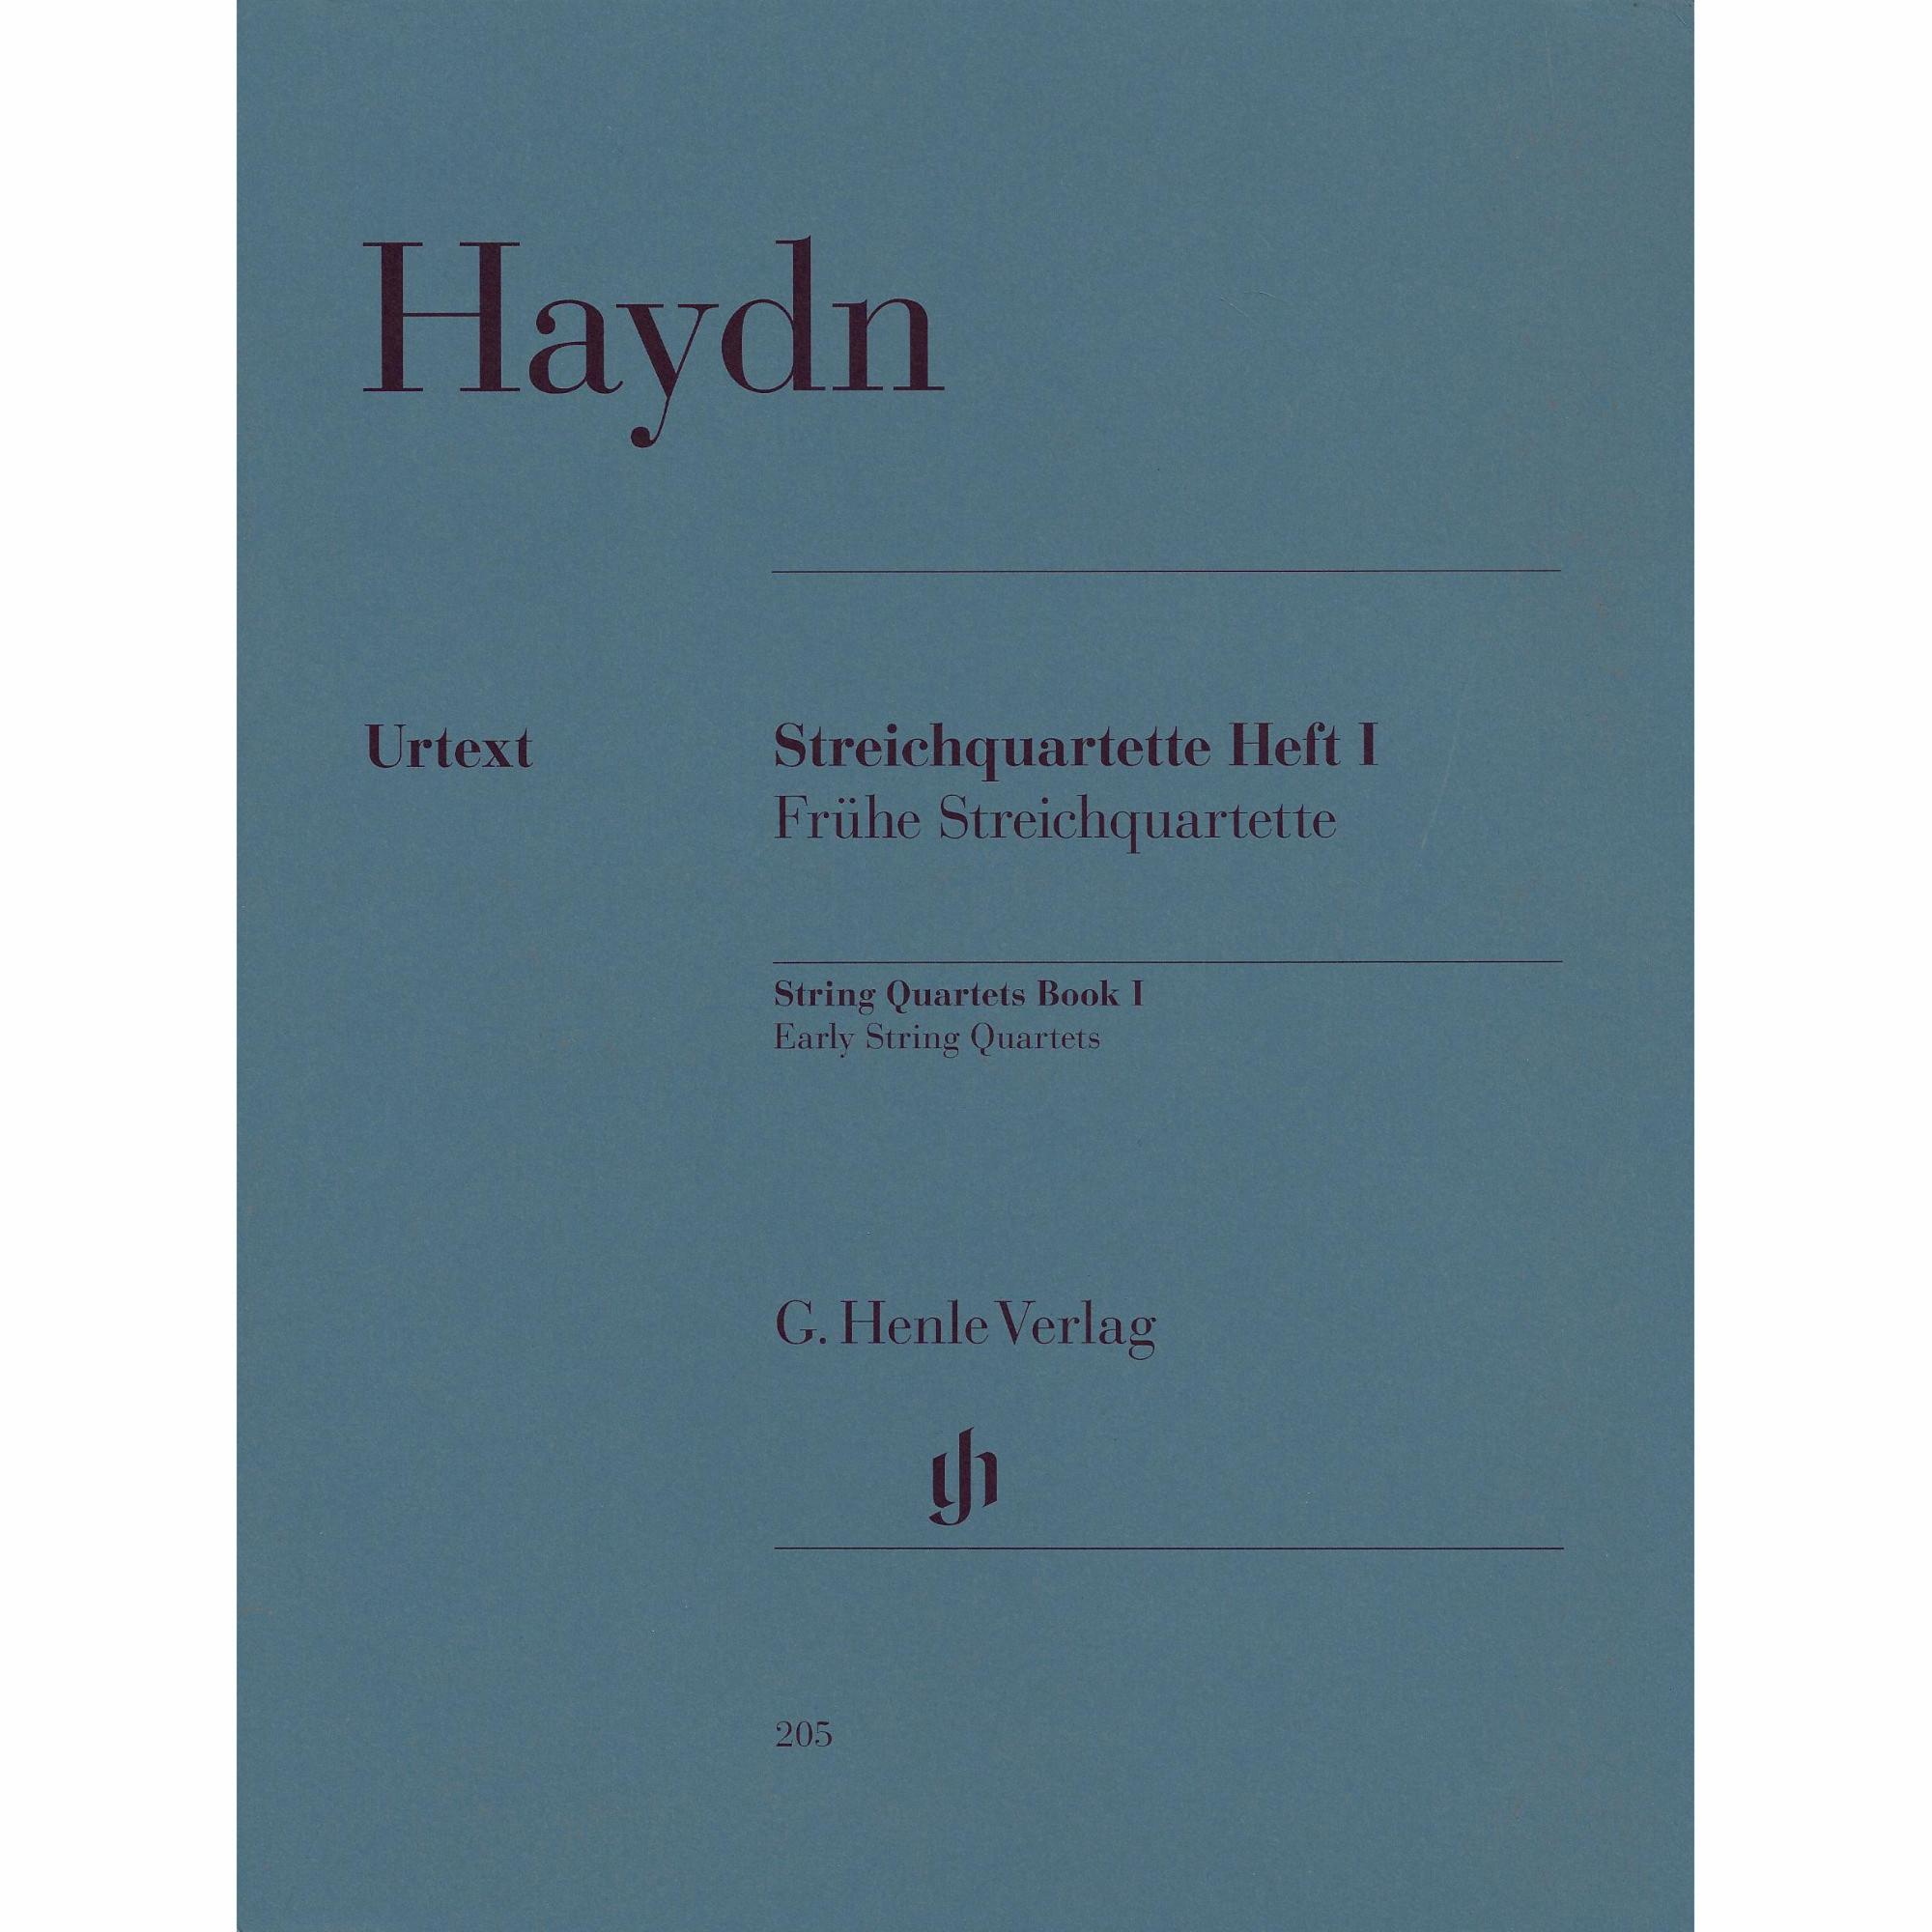 Haydn -- String Quartets, Book I